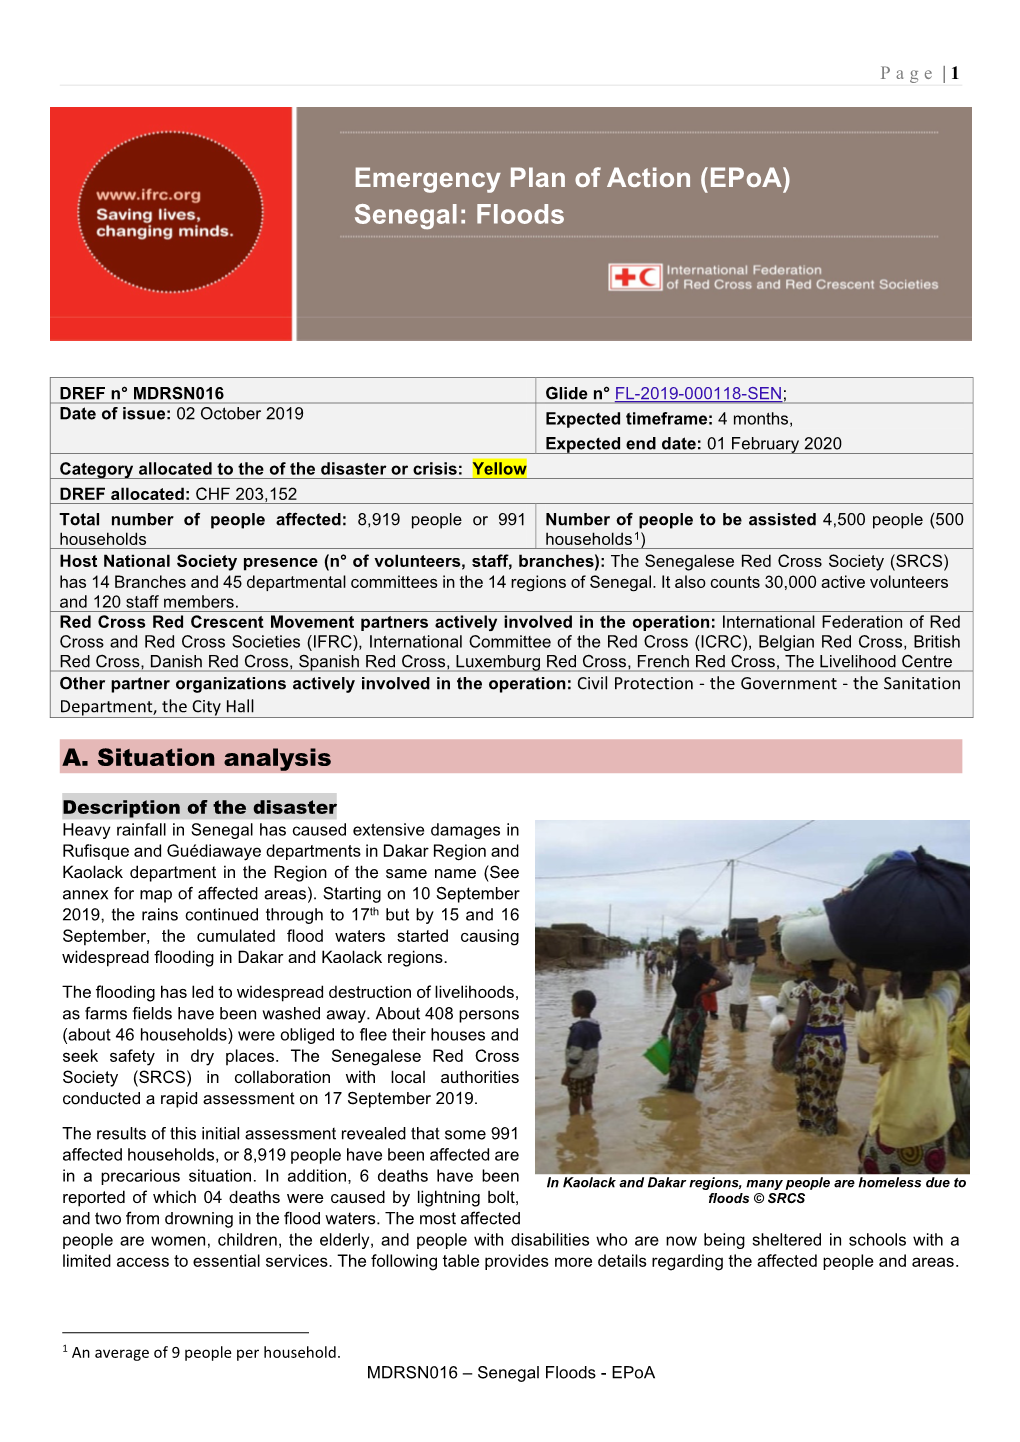 (Epoa) Senegal: Floods Emergency Plan of Action